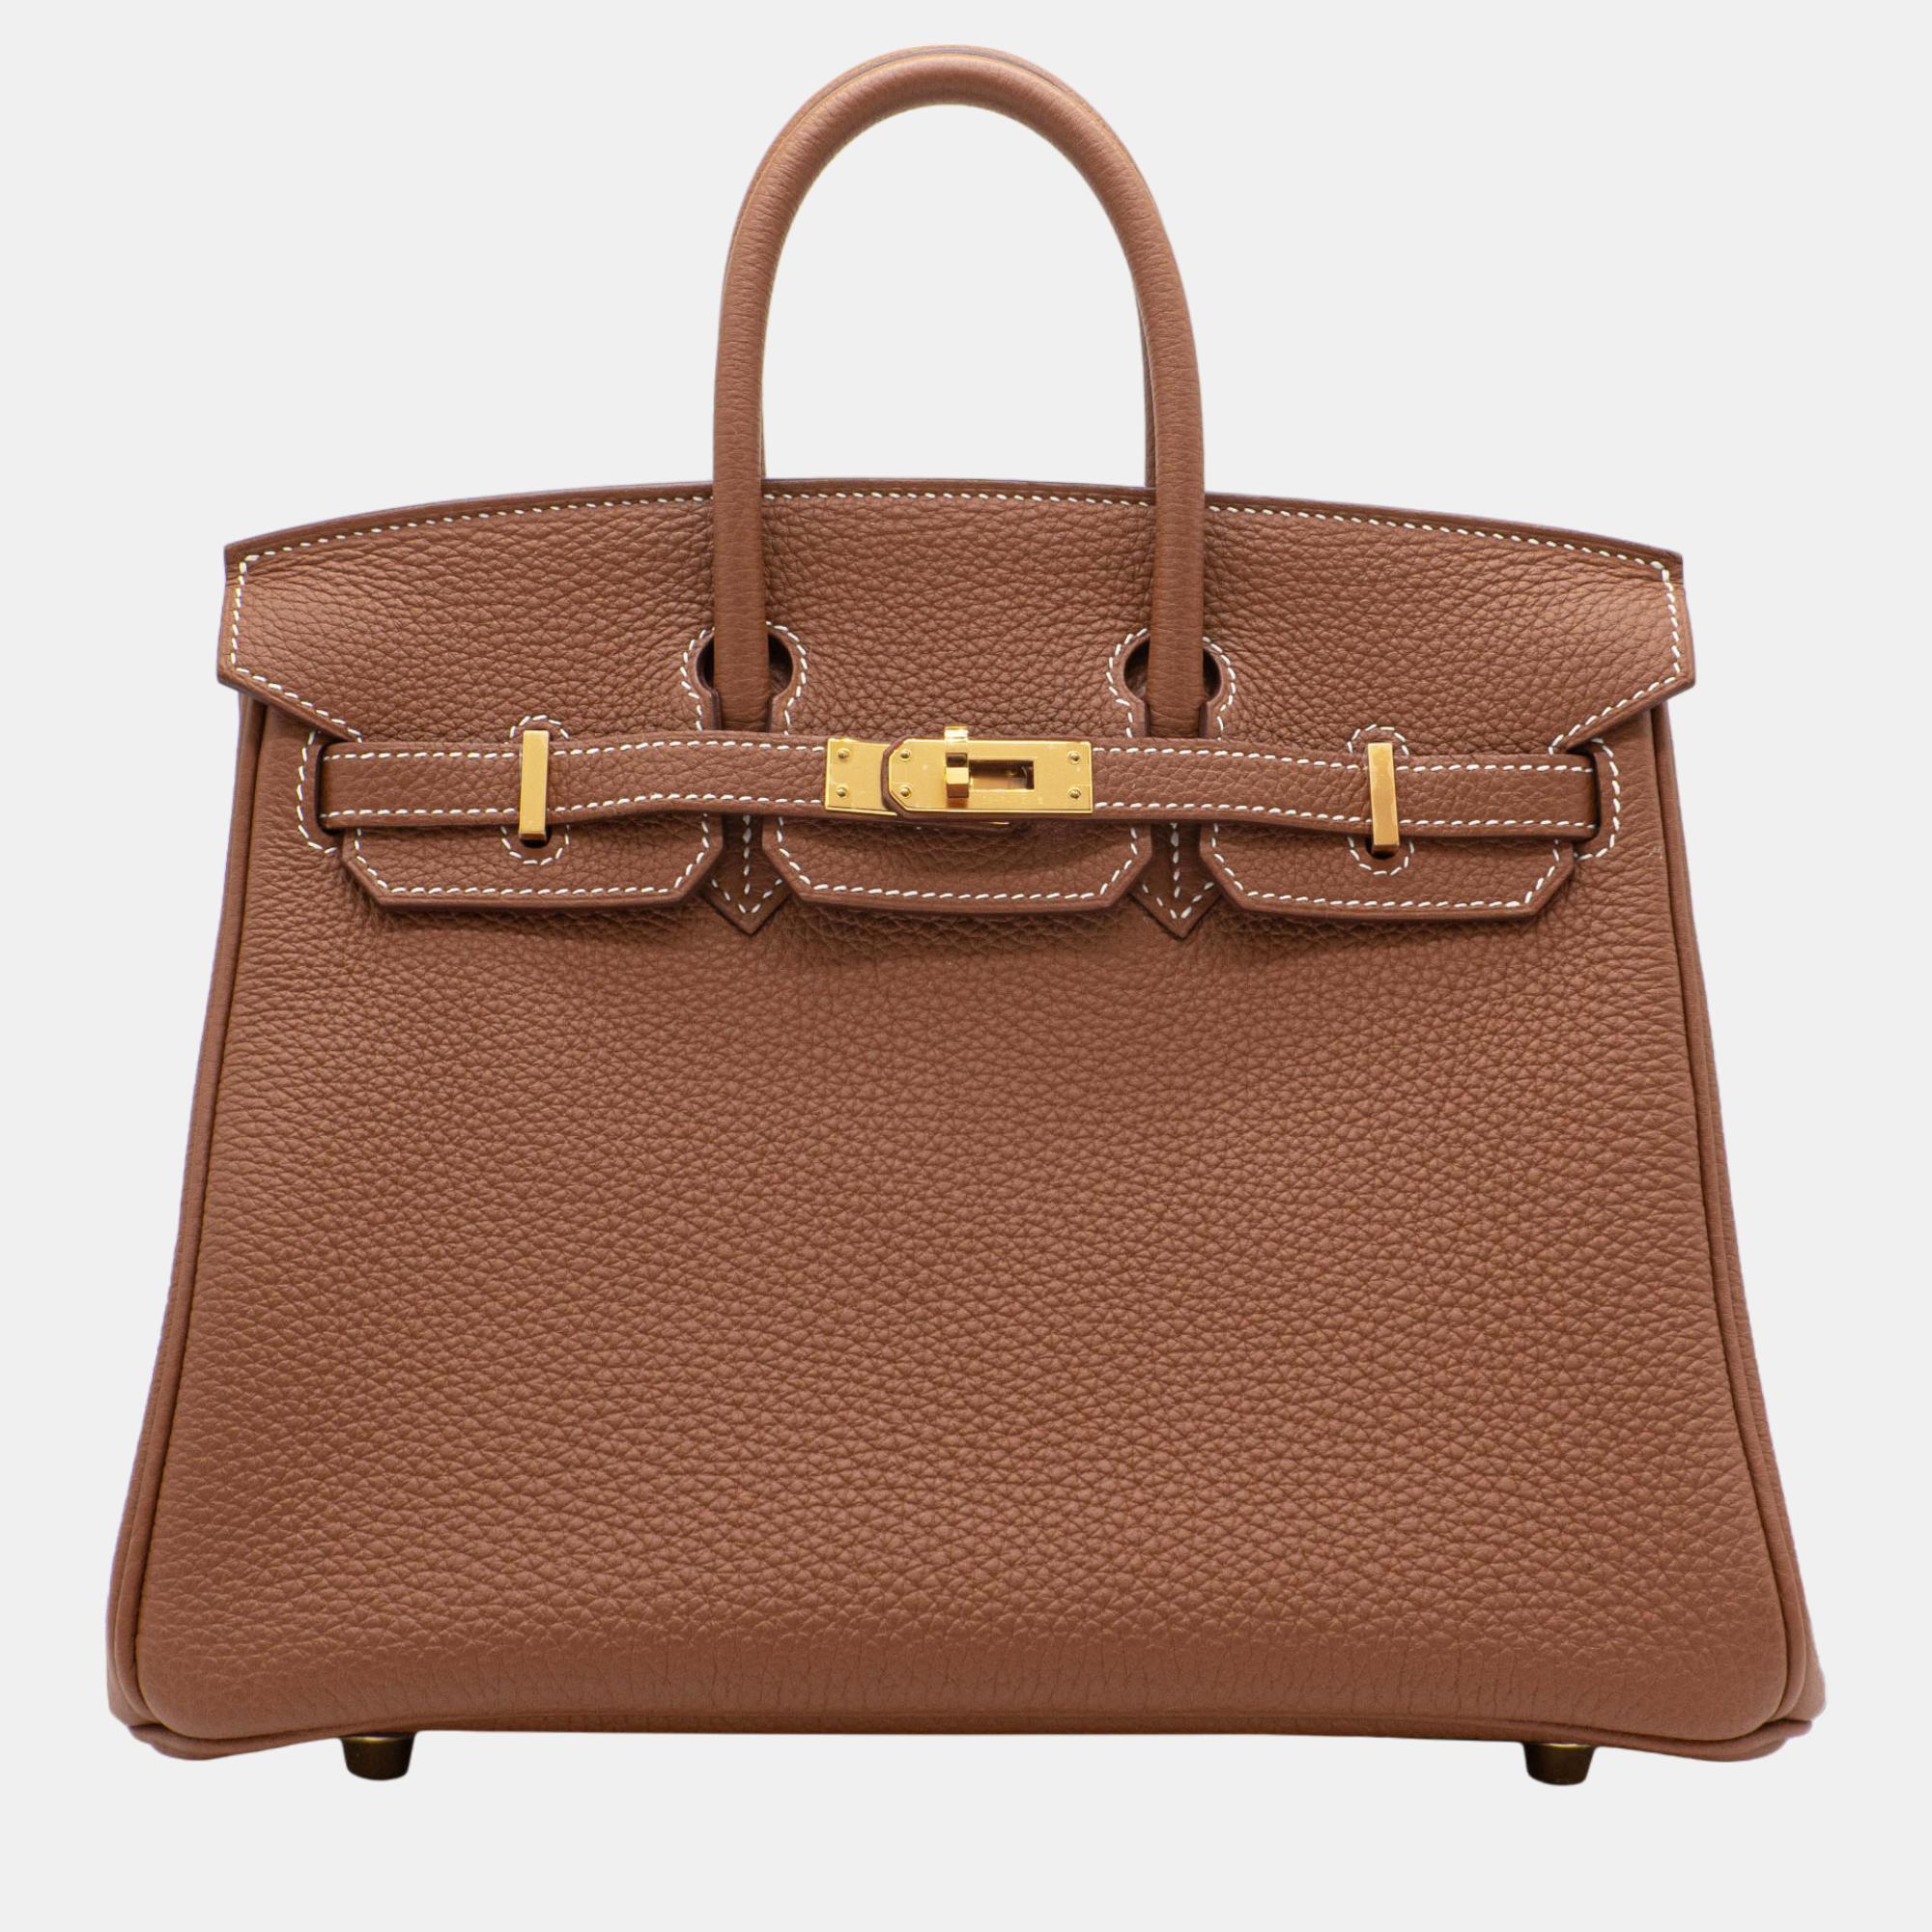 

Hermès Birkin 25 in Gold Togo Leather with GHW Bag, Brown